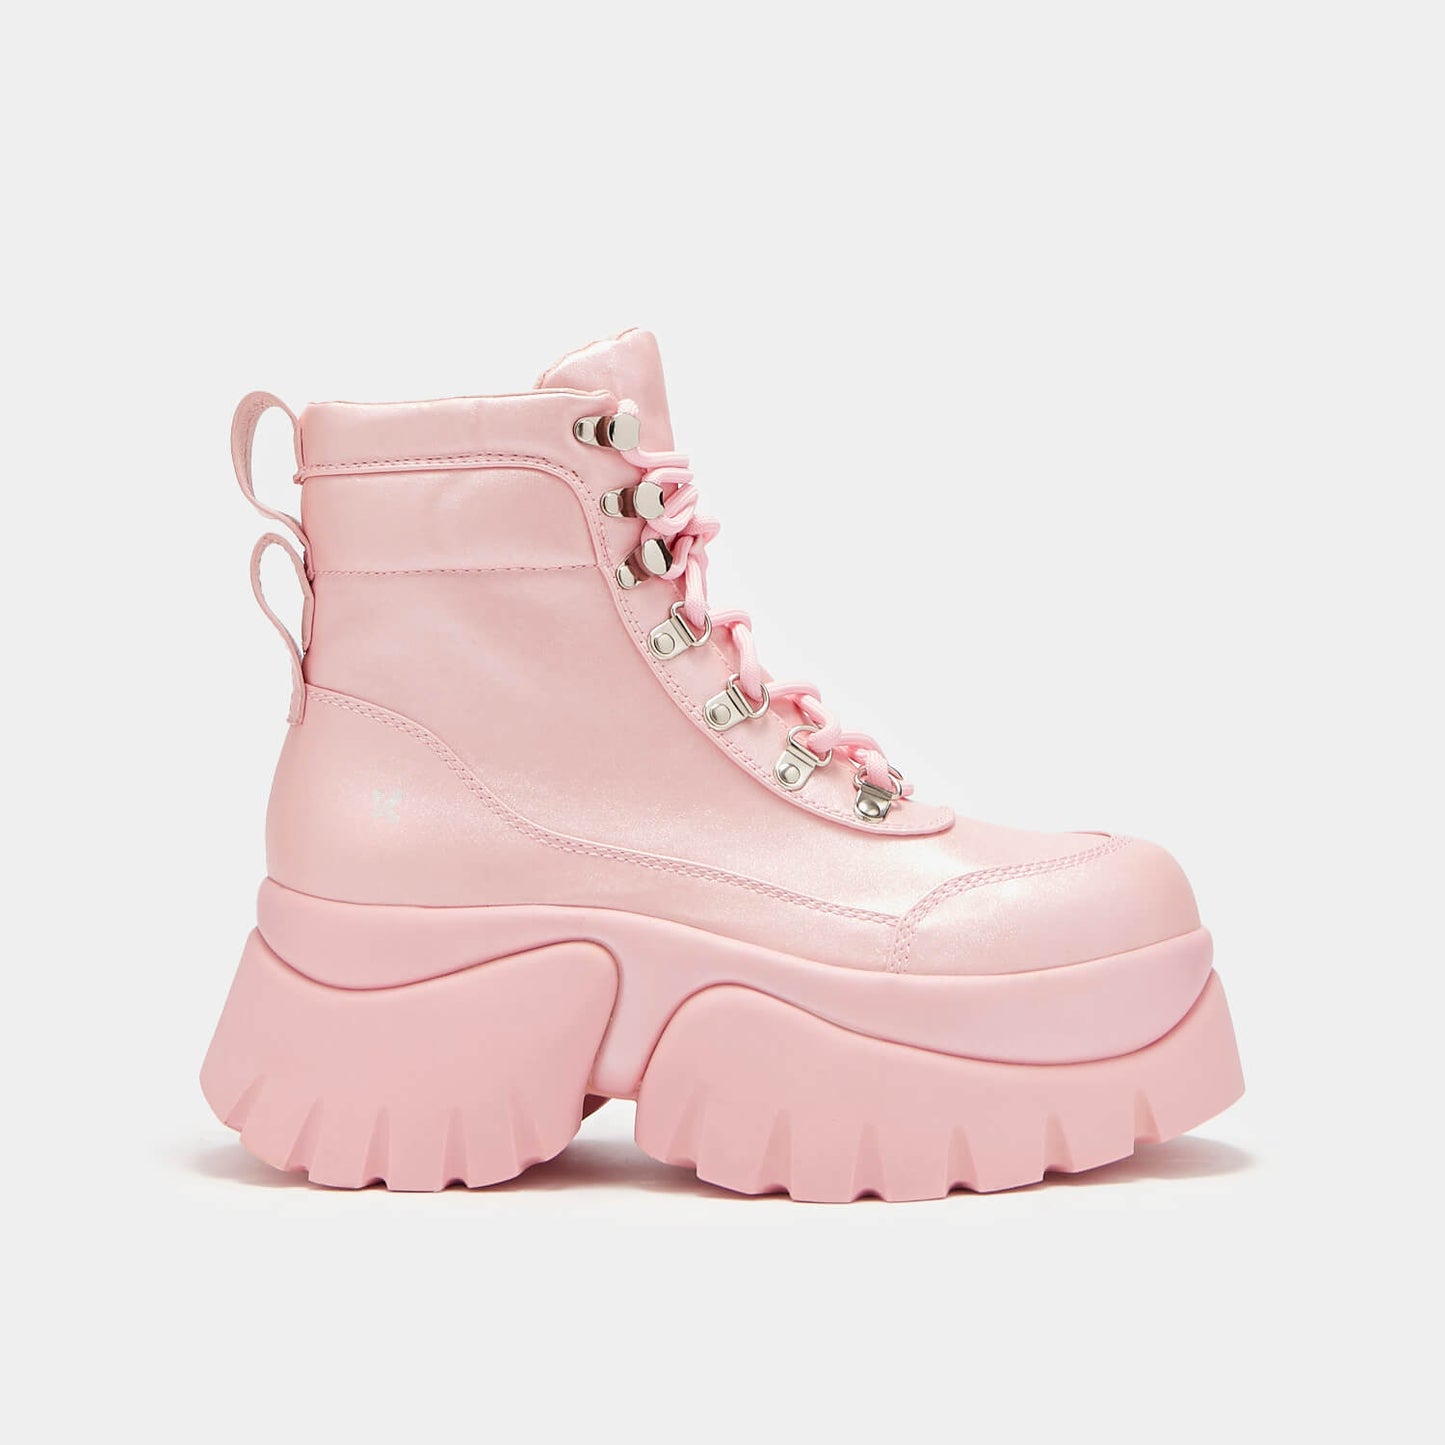 Gooey Bubblegum Platform Boots - Ankle Boots - KOI Footwear - Pink - Side View